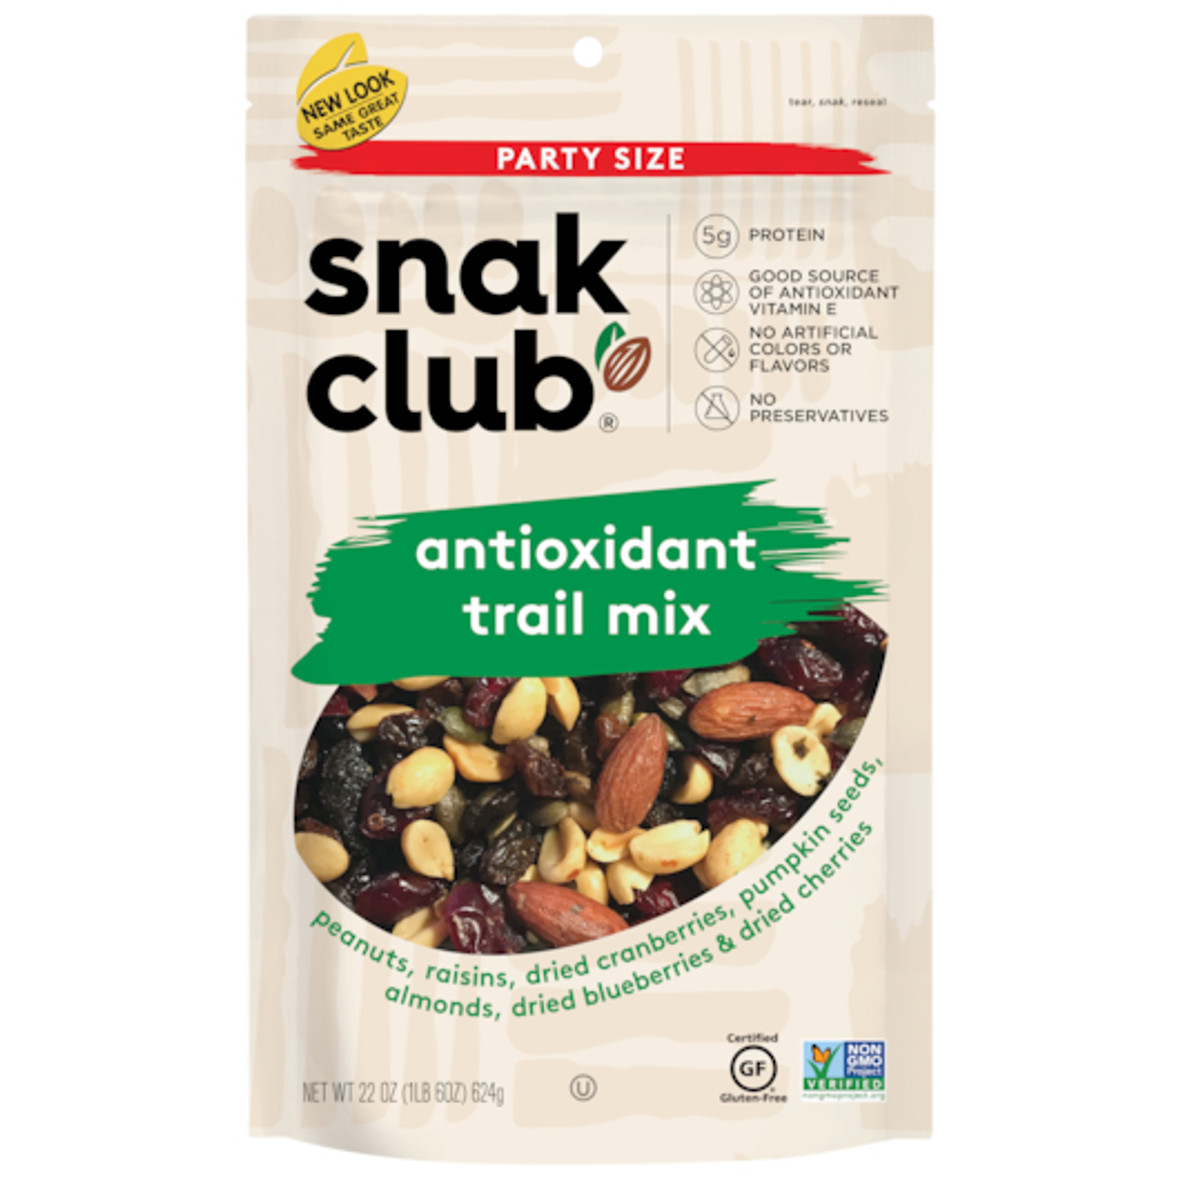 Snak Club Antioxidant Trail Mix Party Size, 1.375 Pound, 6 Per Case